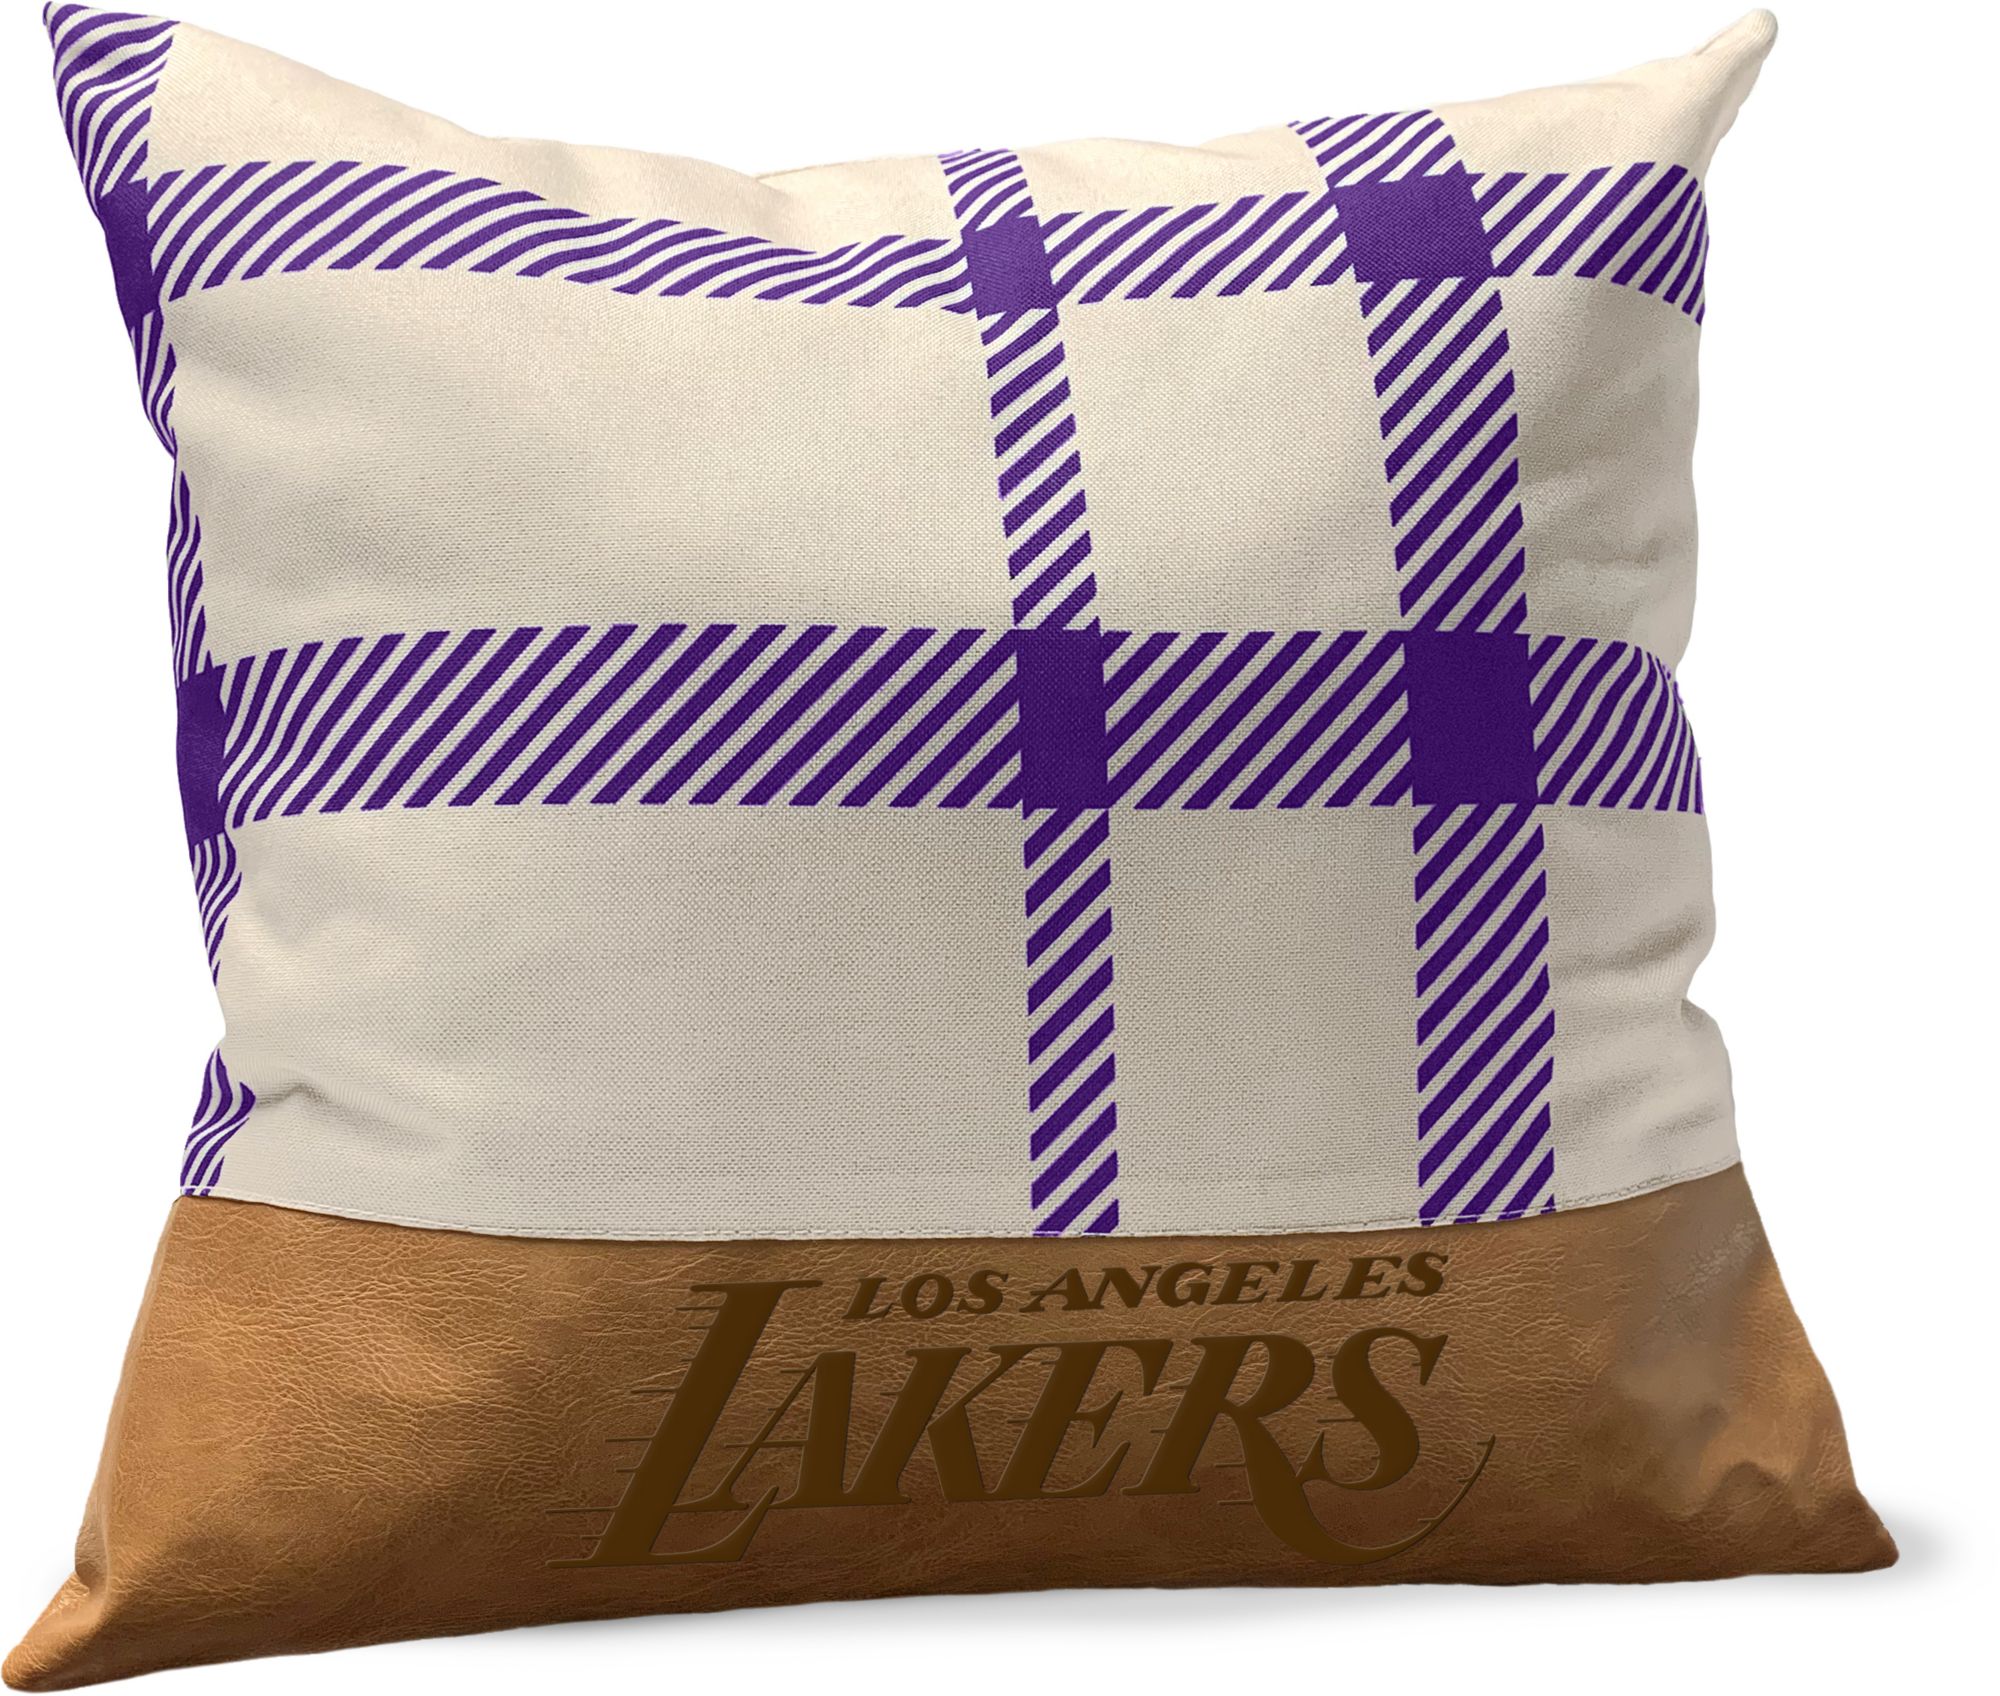 Pegasus Sports Los Angeles Lakers Faux Leather Pillow